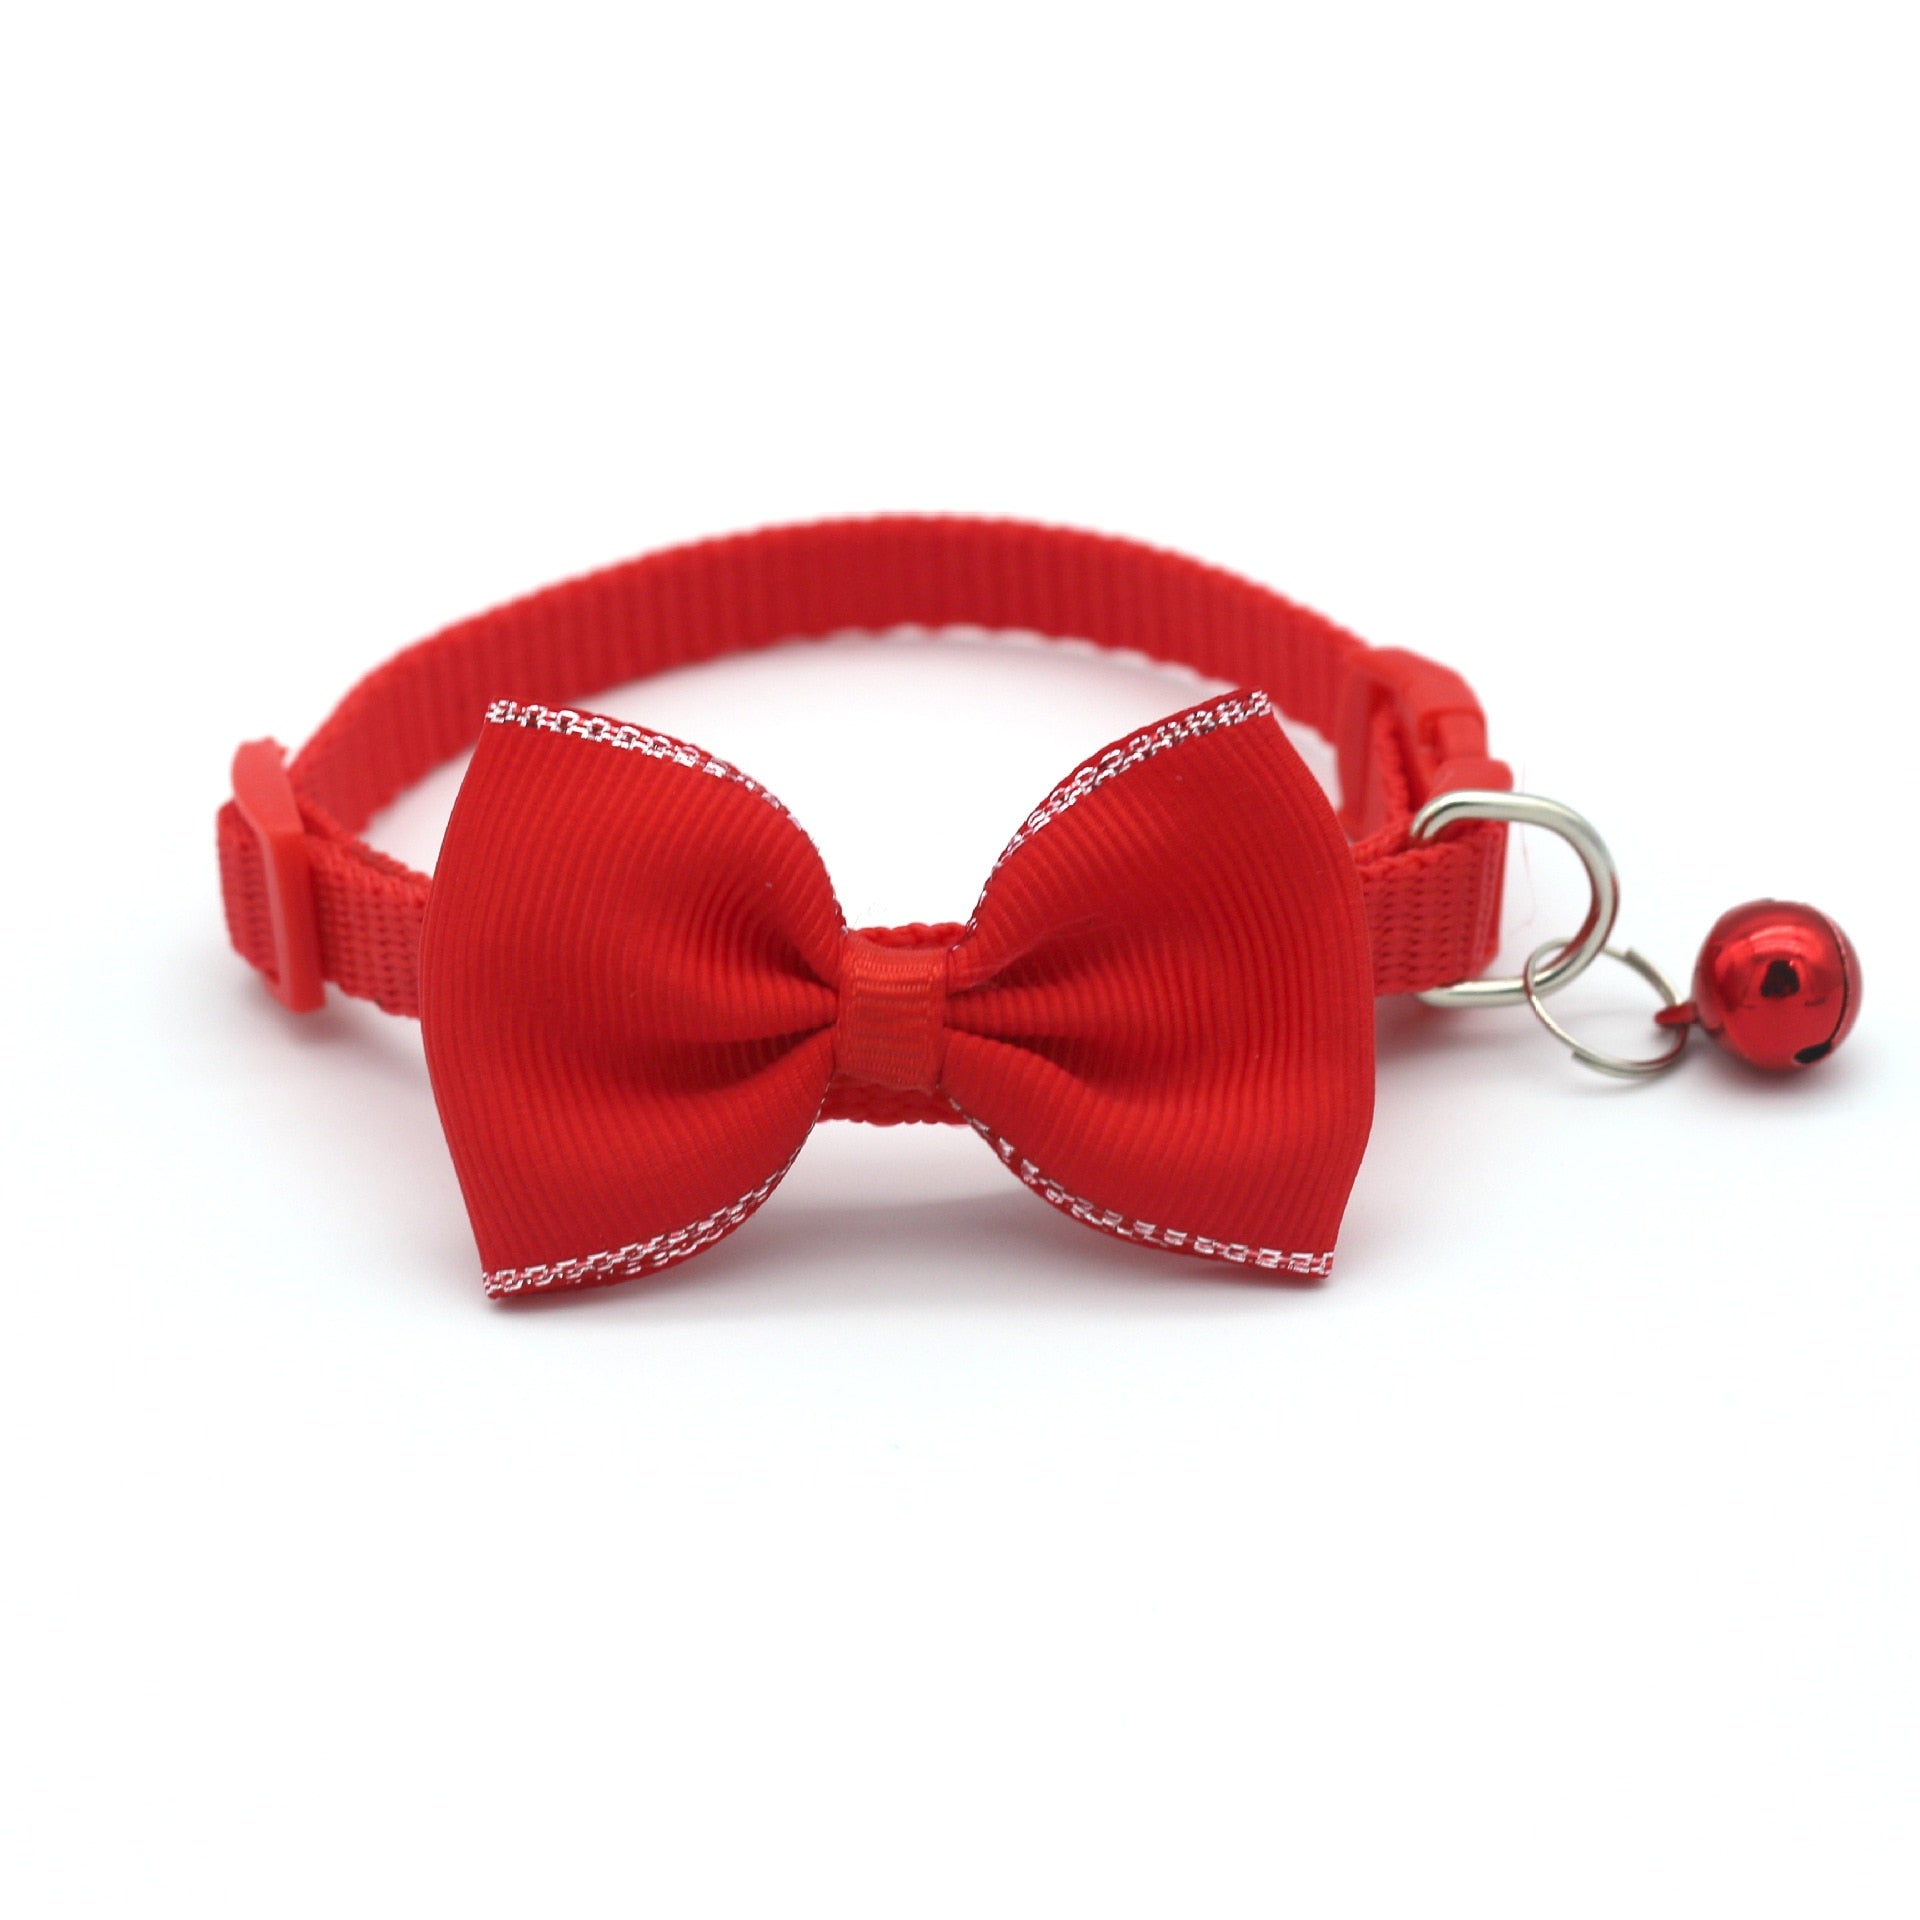 Cat Collars with Bells - Red - Cat collars